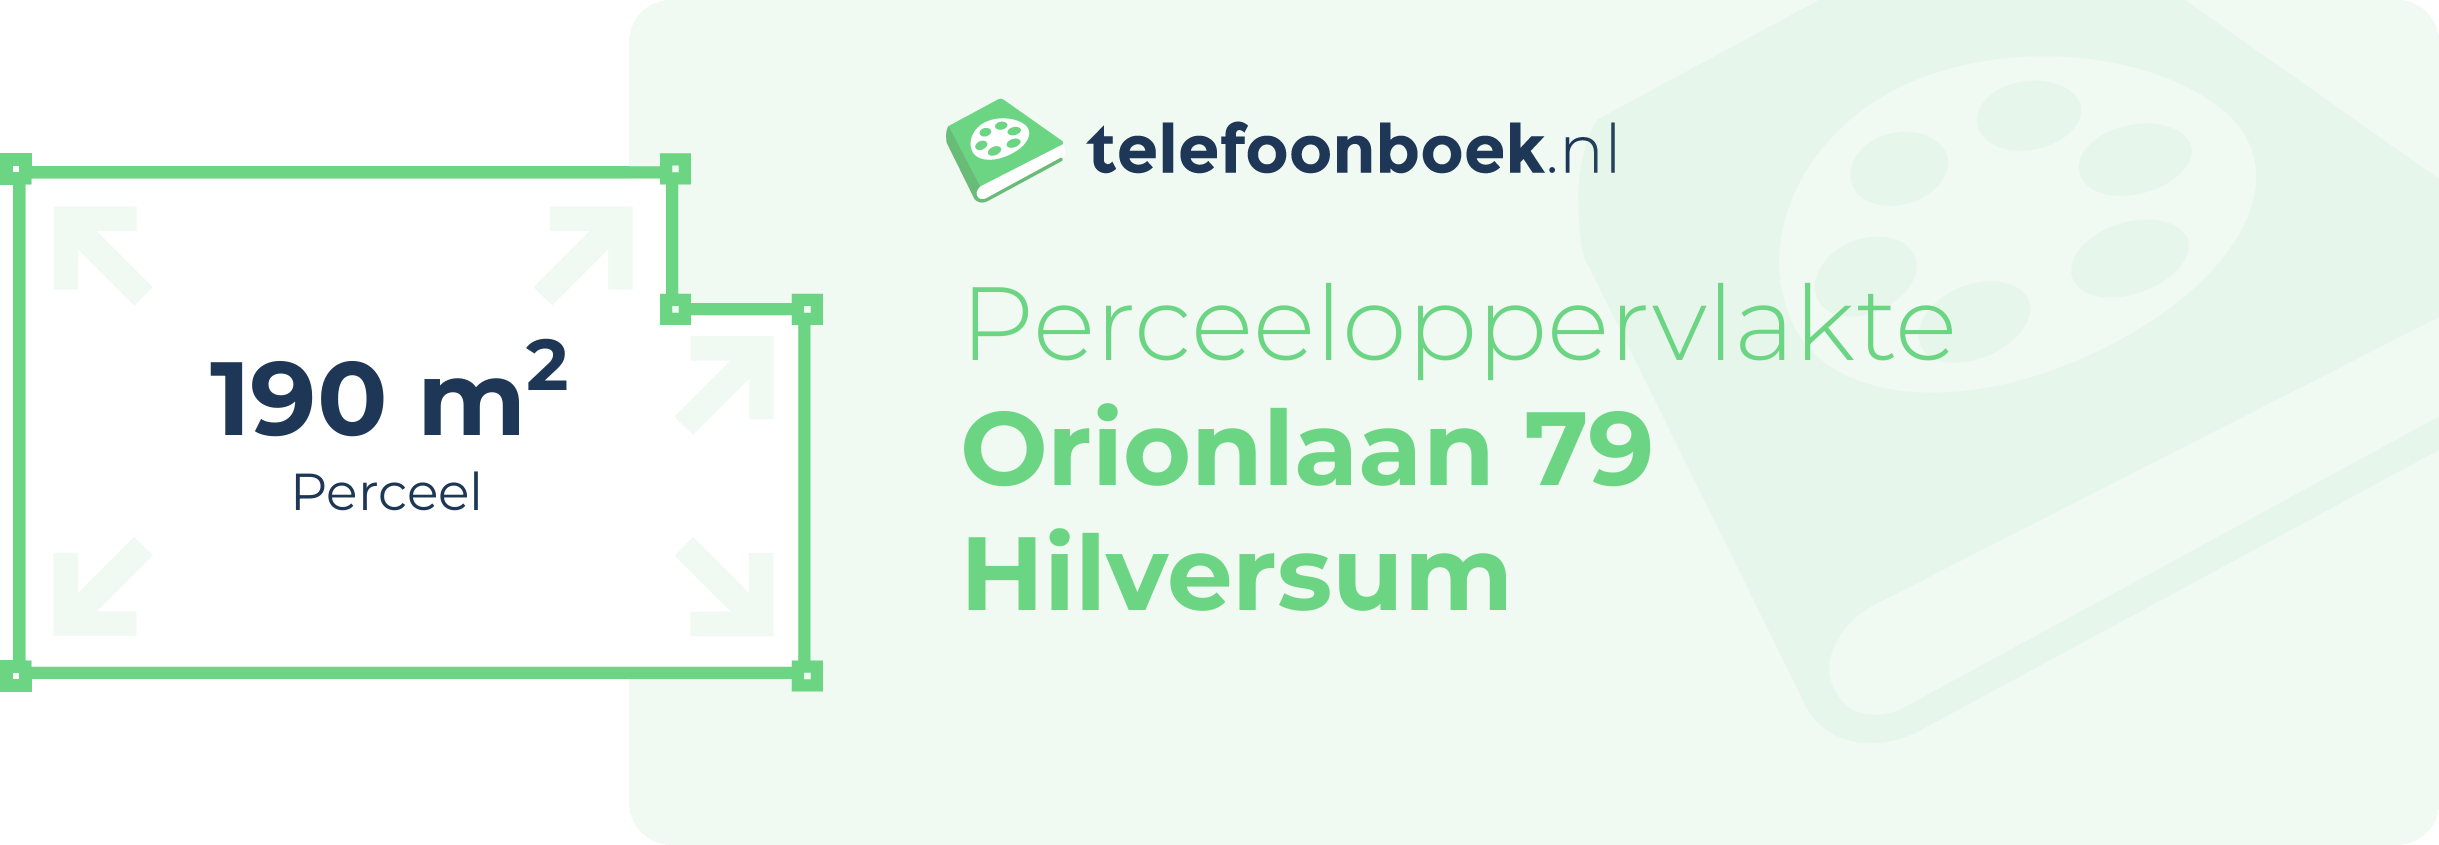 Perceeloppervlakte Orionlaan 79 Hilversum